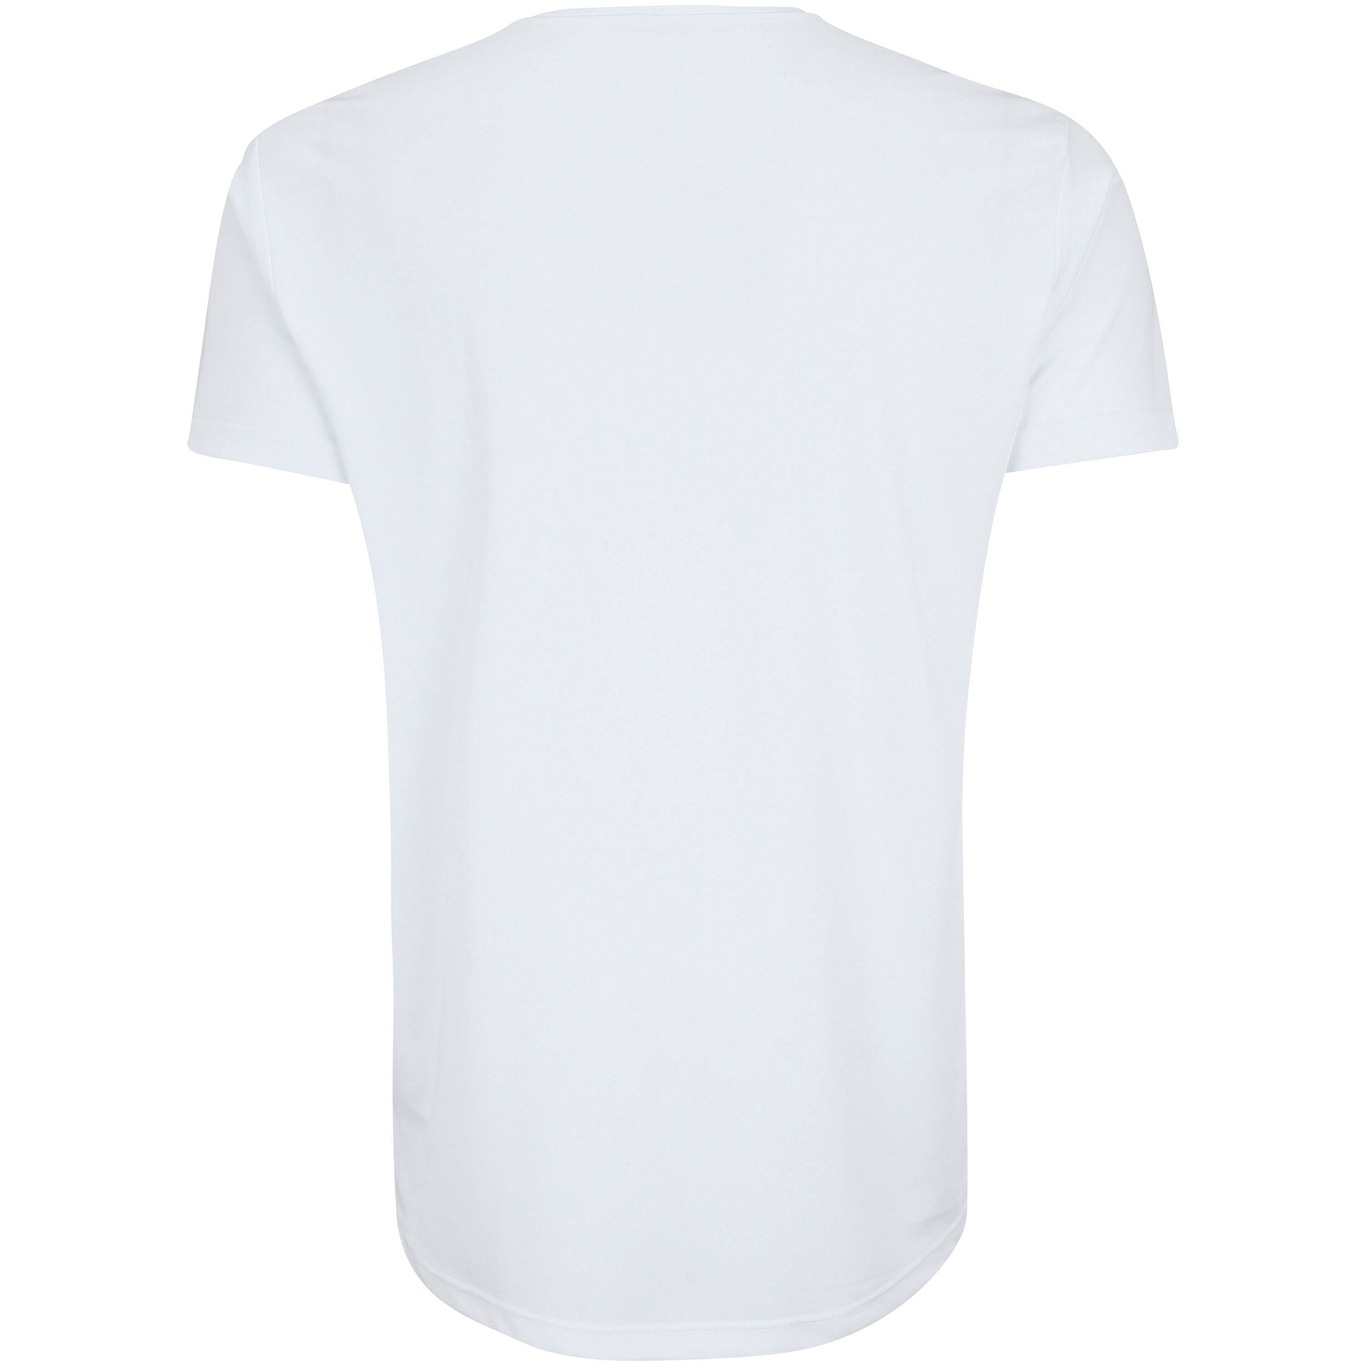 Camiseta Oakley Manga Longa Mod Daily Sport LS Tee III - Masculina em  Promoção